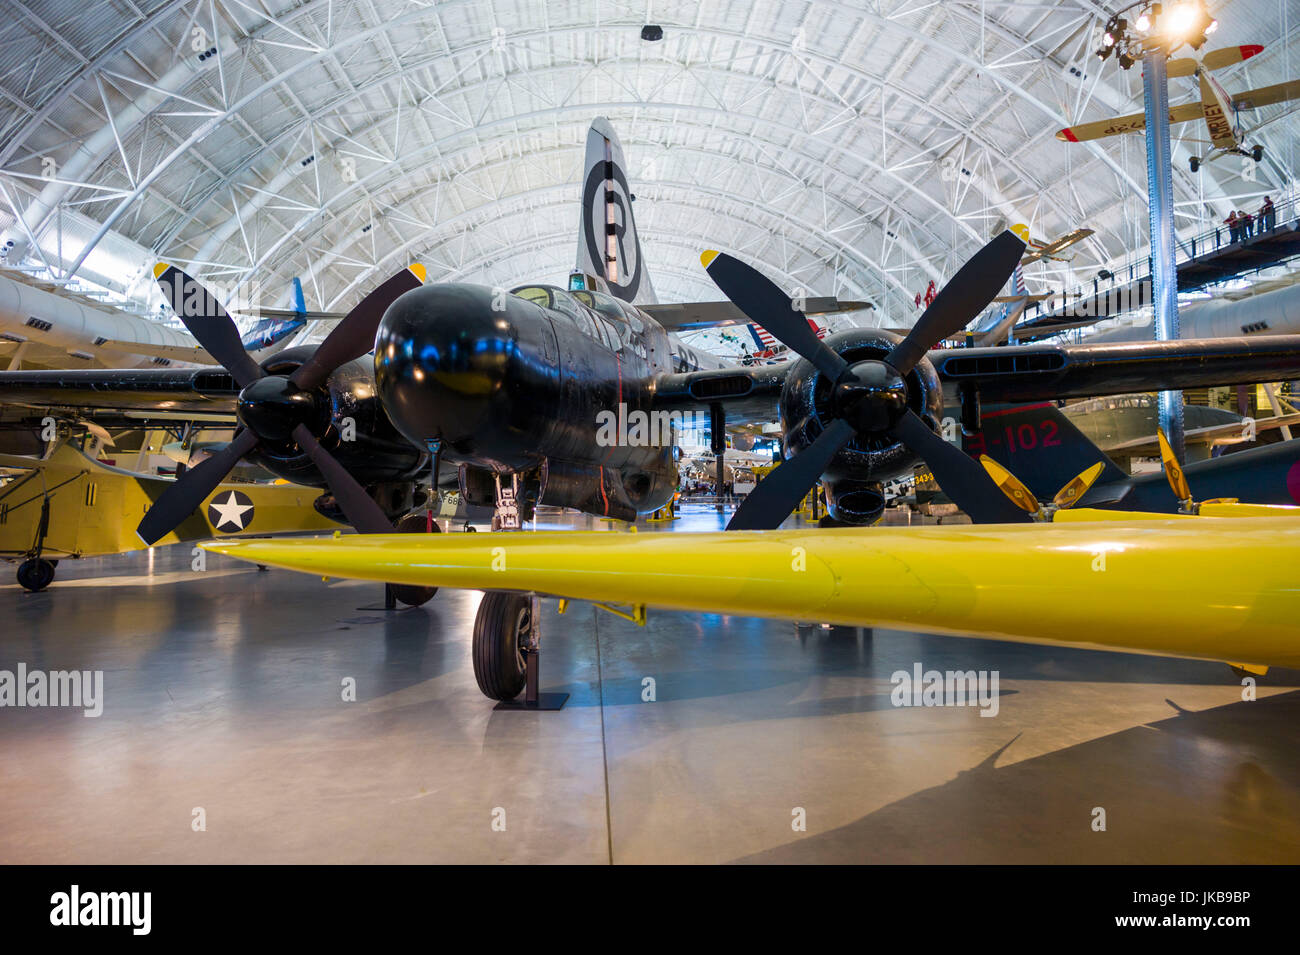 USA, Virginia, Herdon, National Air and Space Museum, Steven F. Udvar-Hazy Center, air museum, WW2-era, P-61 Black Widow night fighter Stock Photo